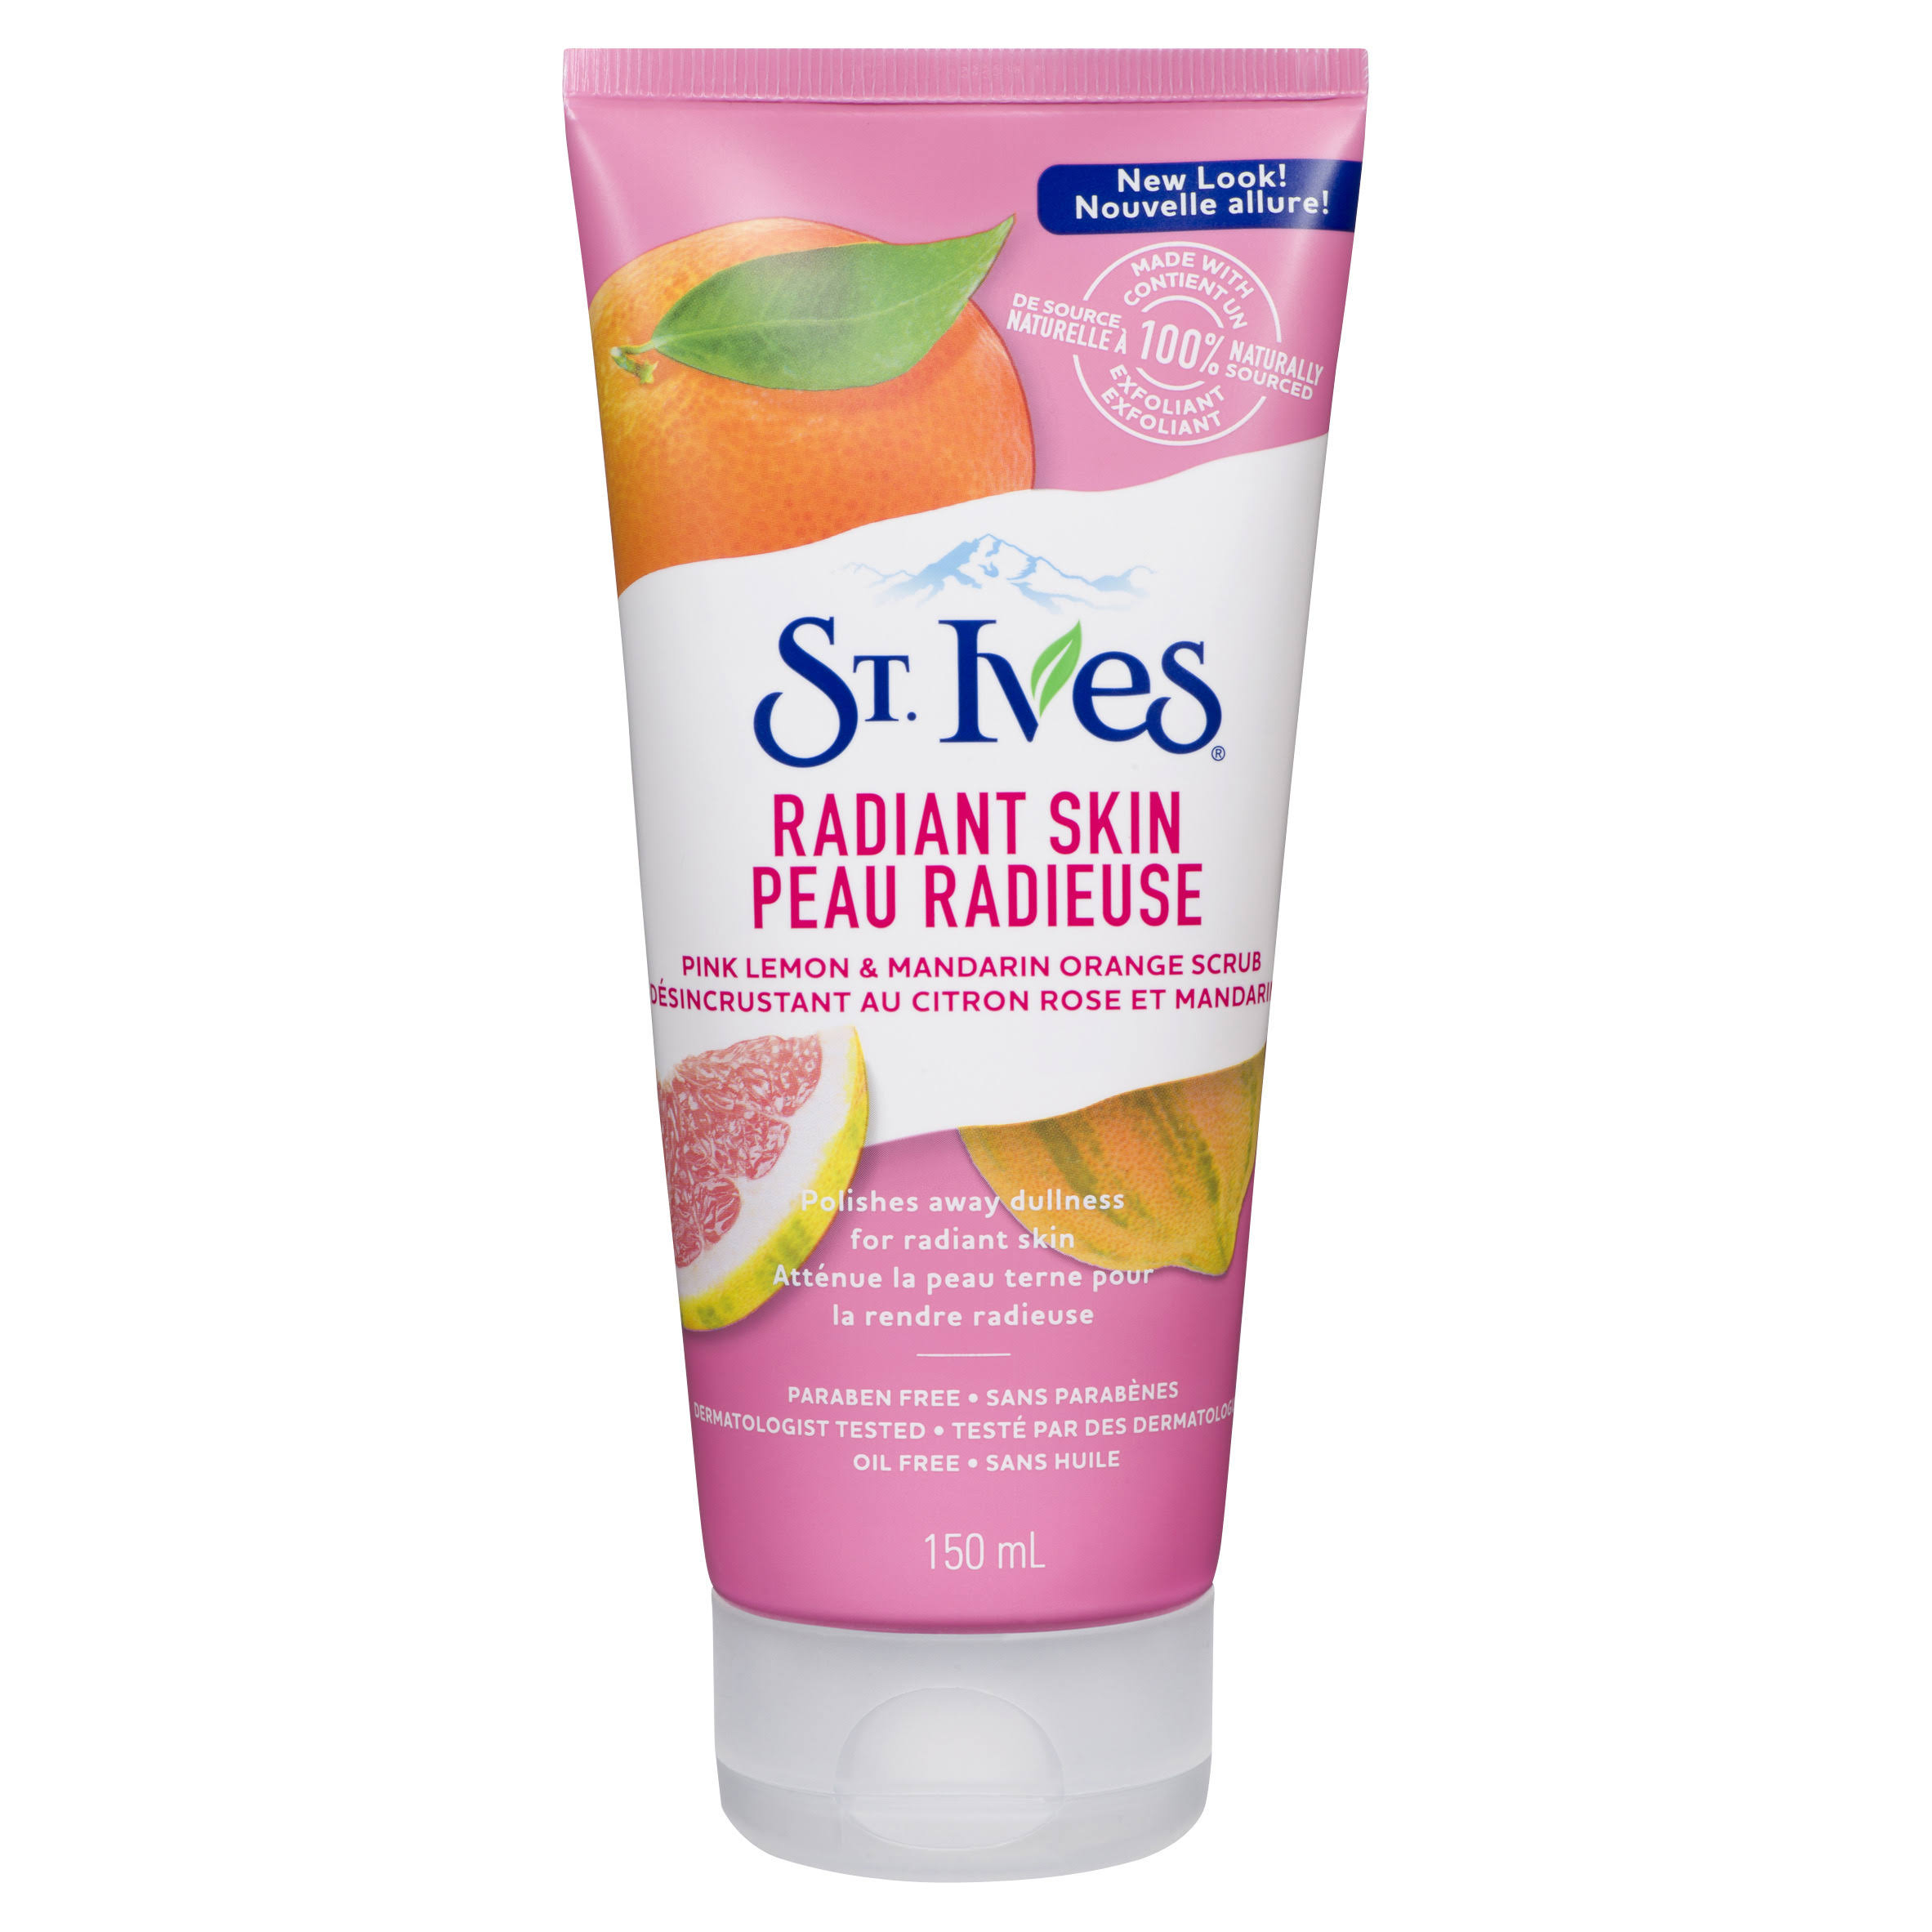 St. Ives Even & Bright Pink Lemon & Mandaran Orange Scrub - 150ml